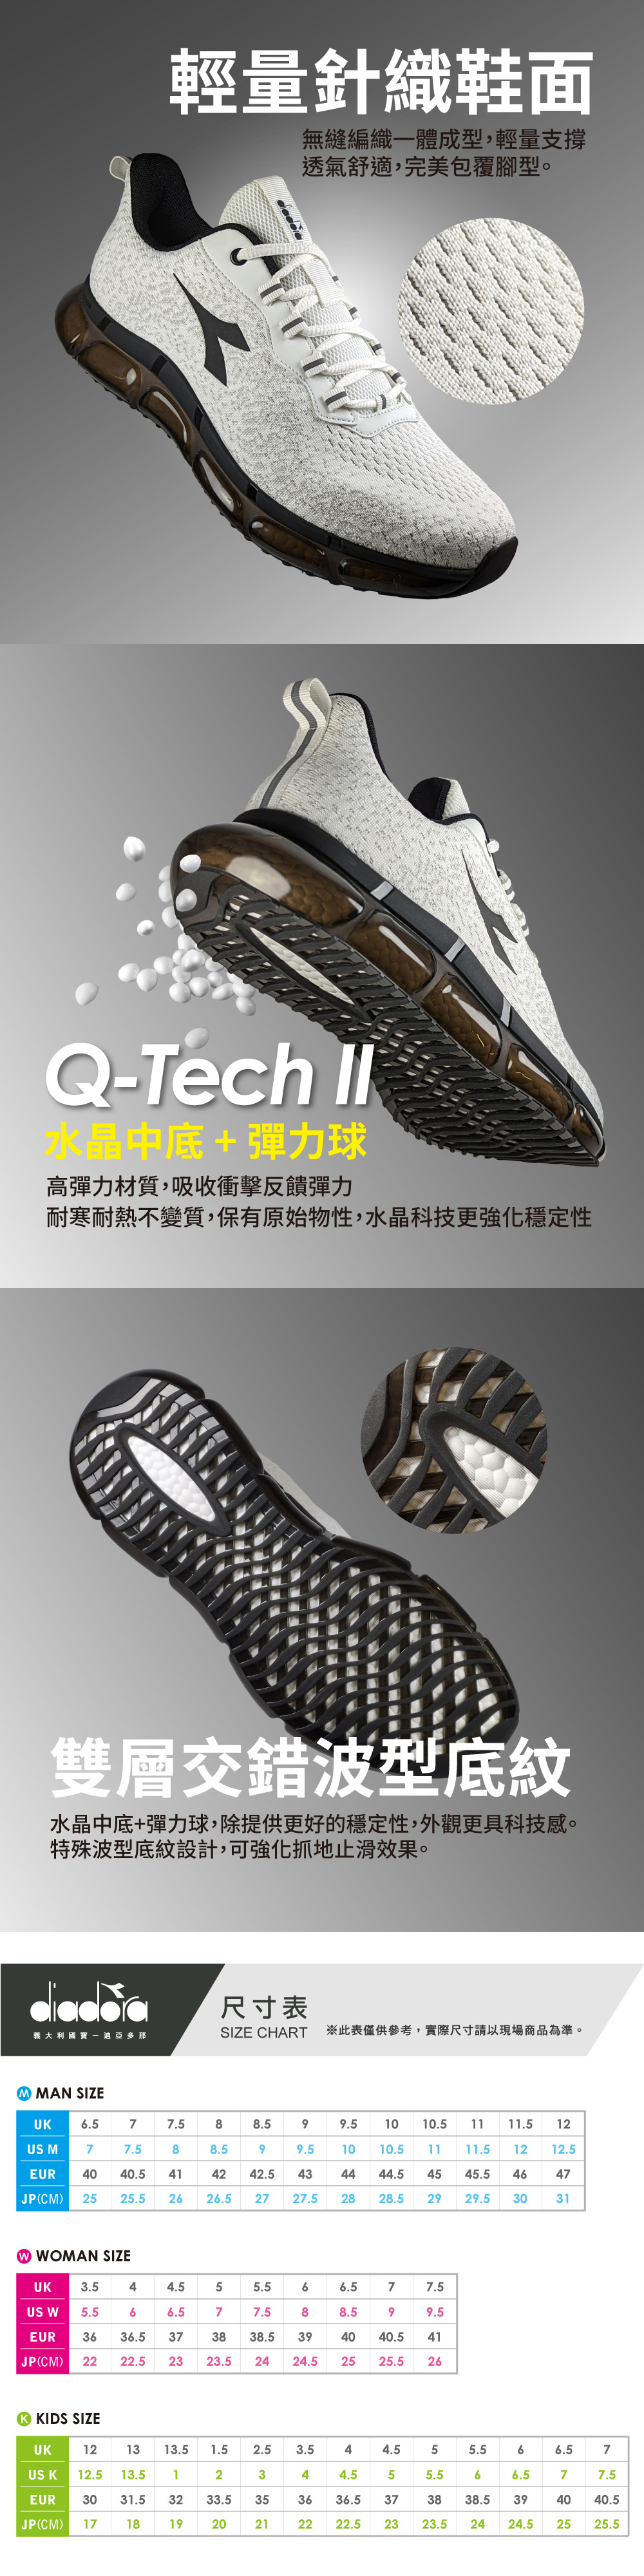 diadora避震跑鞋， 高彈EVA鞋墊 ， Q-Tech II 中底，交錯波型底紋。